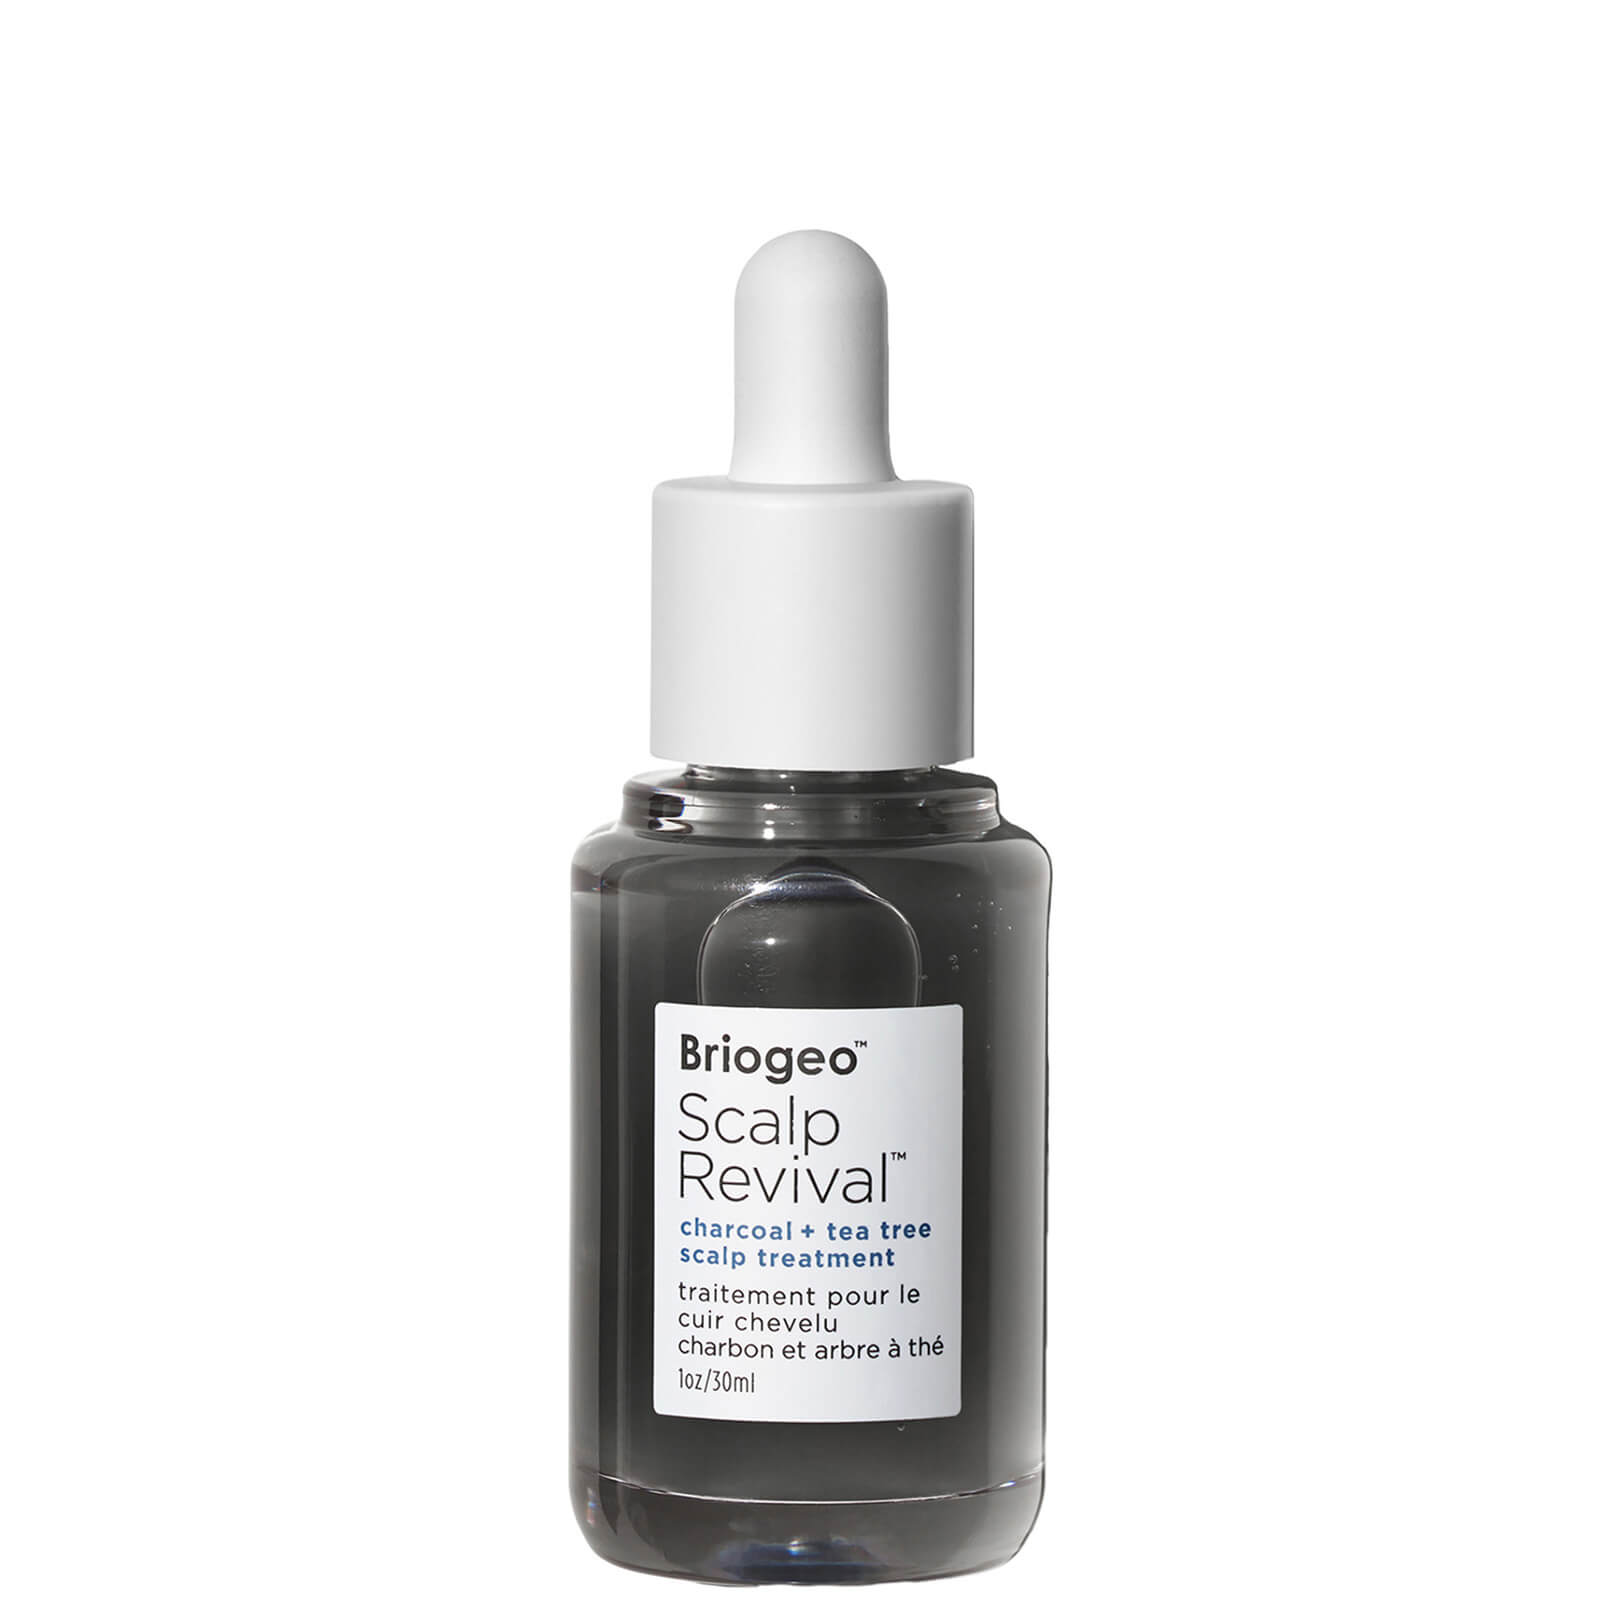 Briogeo Scalp Revival Charcoal and Tea Tree Scalp Treatment Serum 30ml